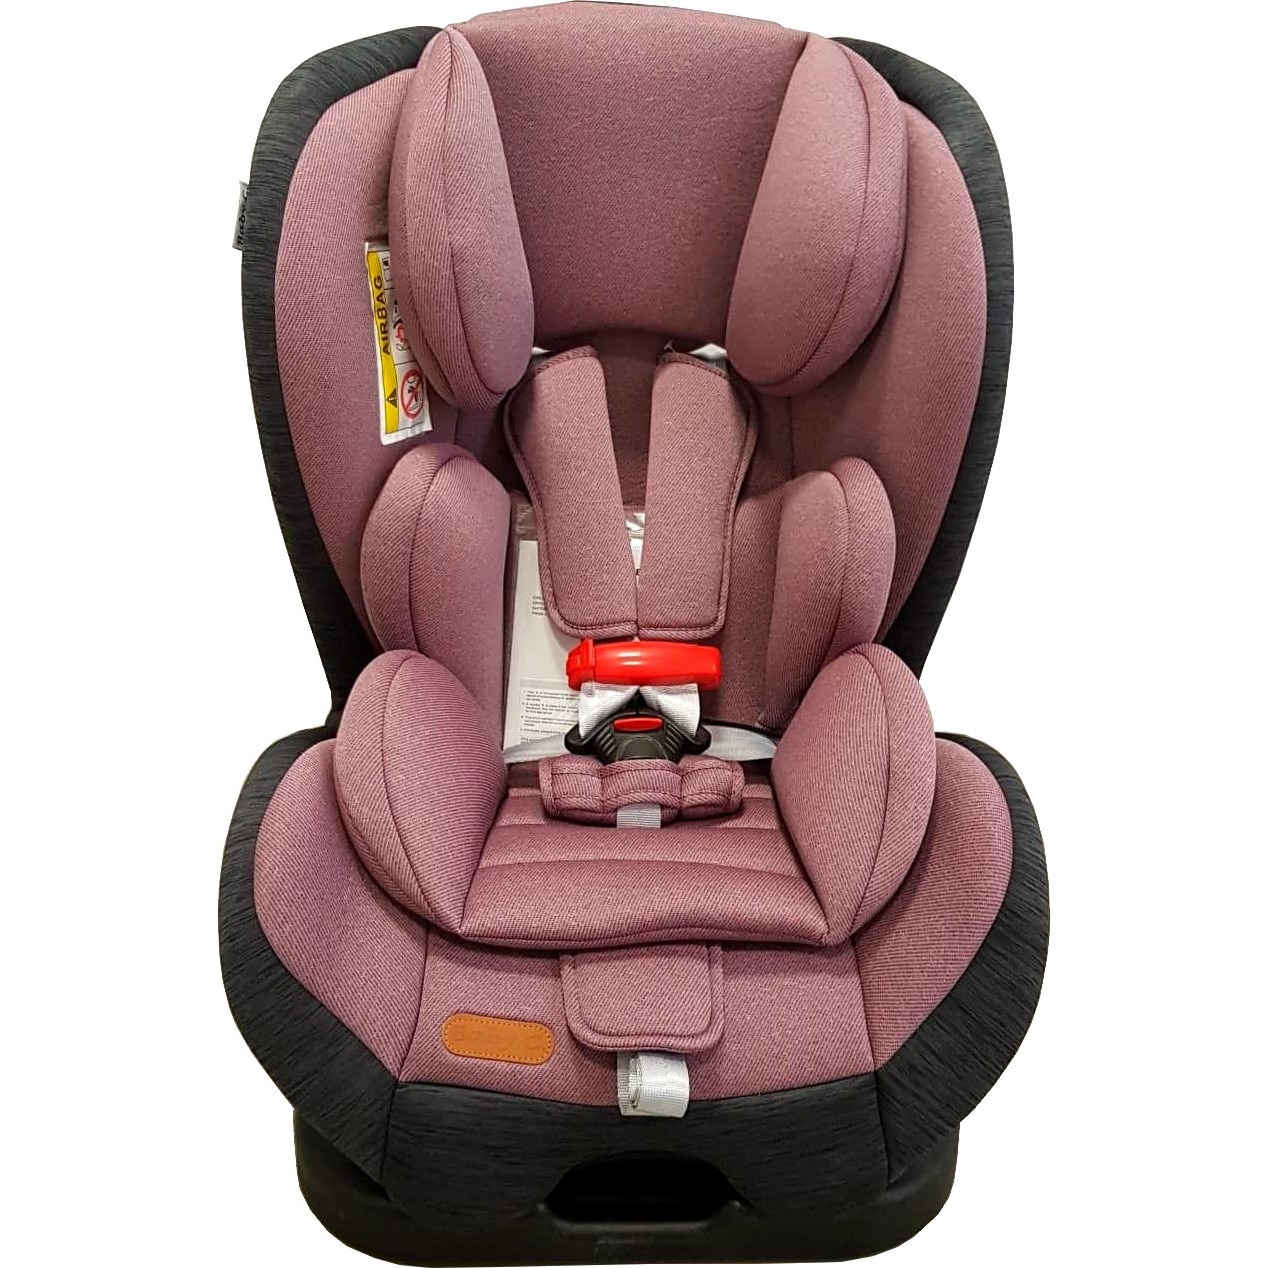 zero Privileged something Scaun Auto Baby Care™ Safety Seat, Transformabil in scoica auto, 0-18 kg,  Spatar reglabil in 4 trepte, Centura de siguranta cu prindere in 5 puncte,  Husa detasabila, Mov cu Gri - eMAG.ro